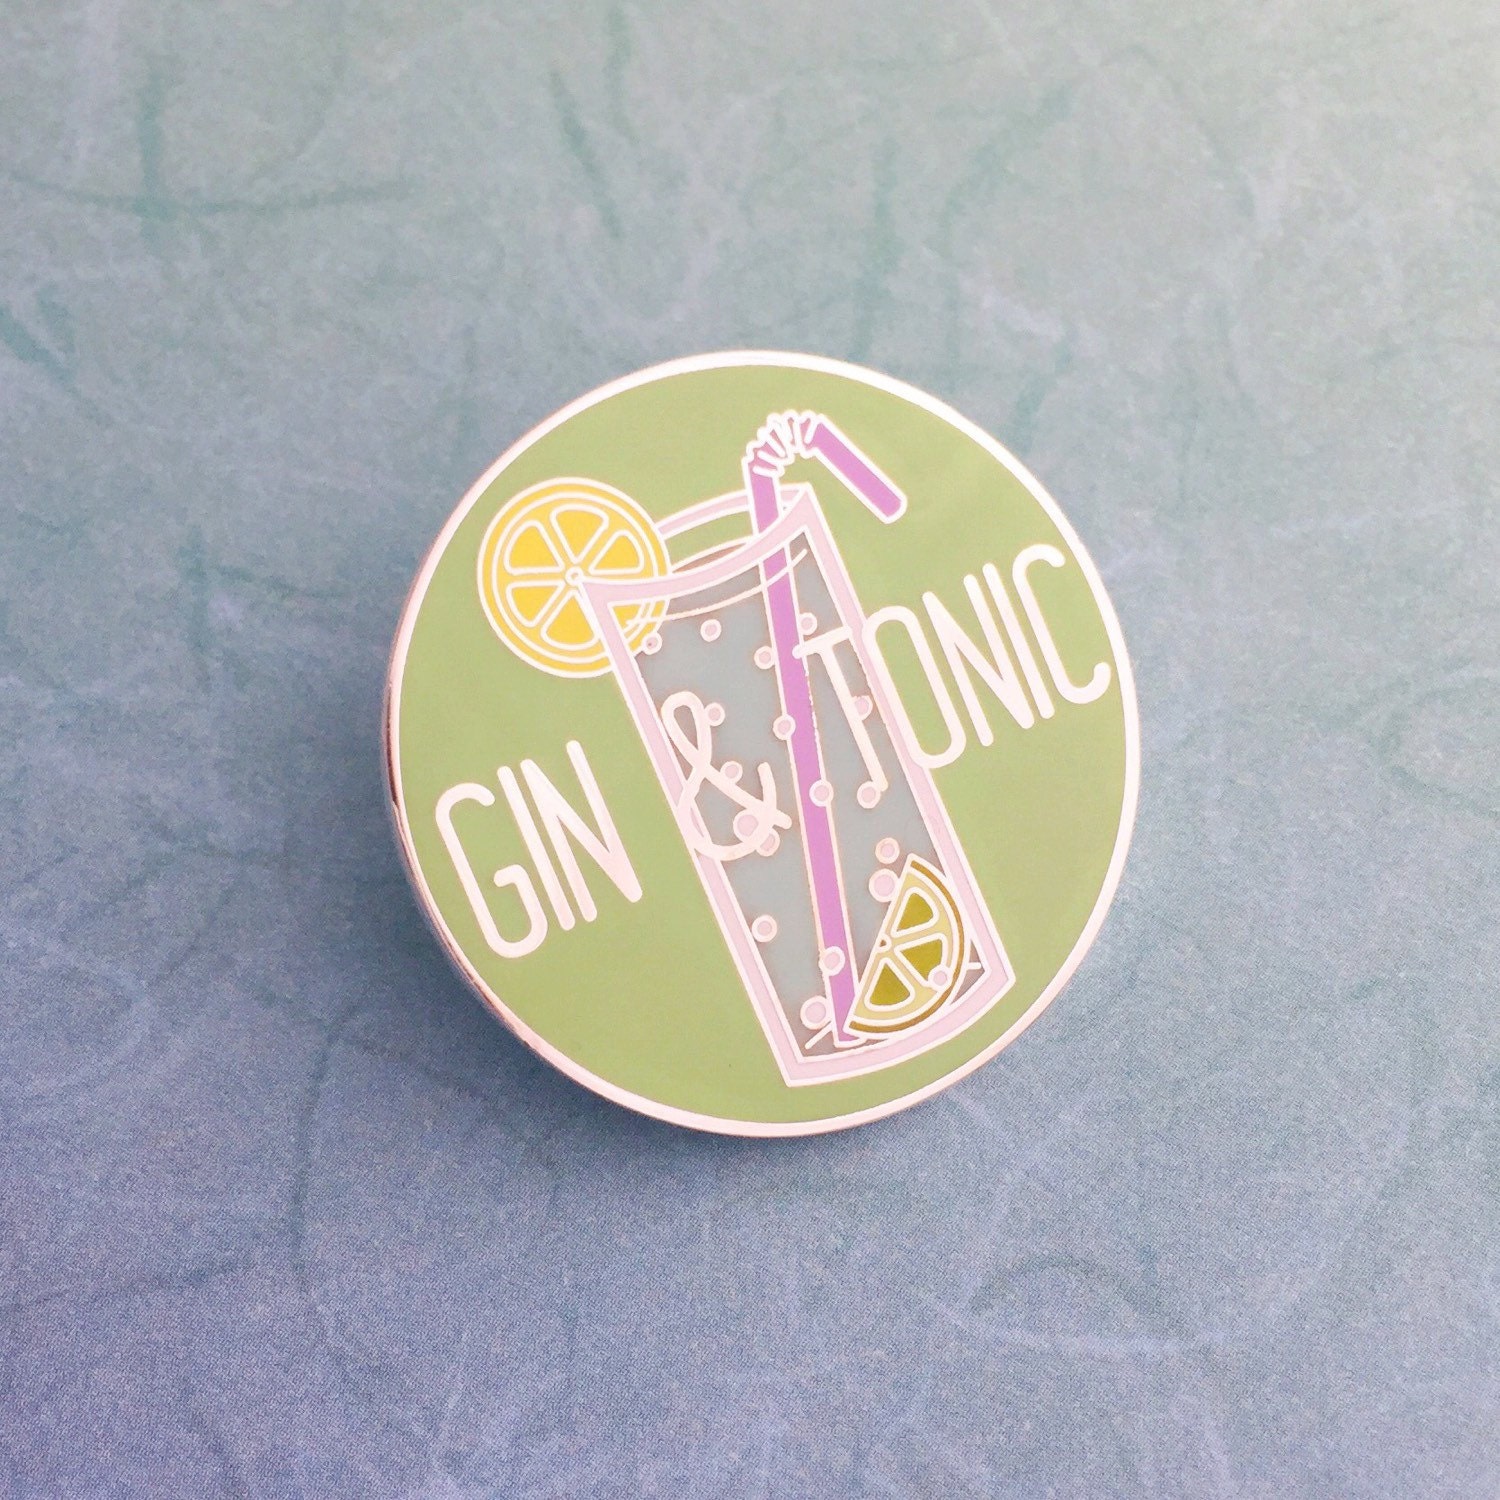 Gin and Tonic Enamel Pin Badge Gin Badge Lapel Pin Tie